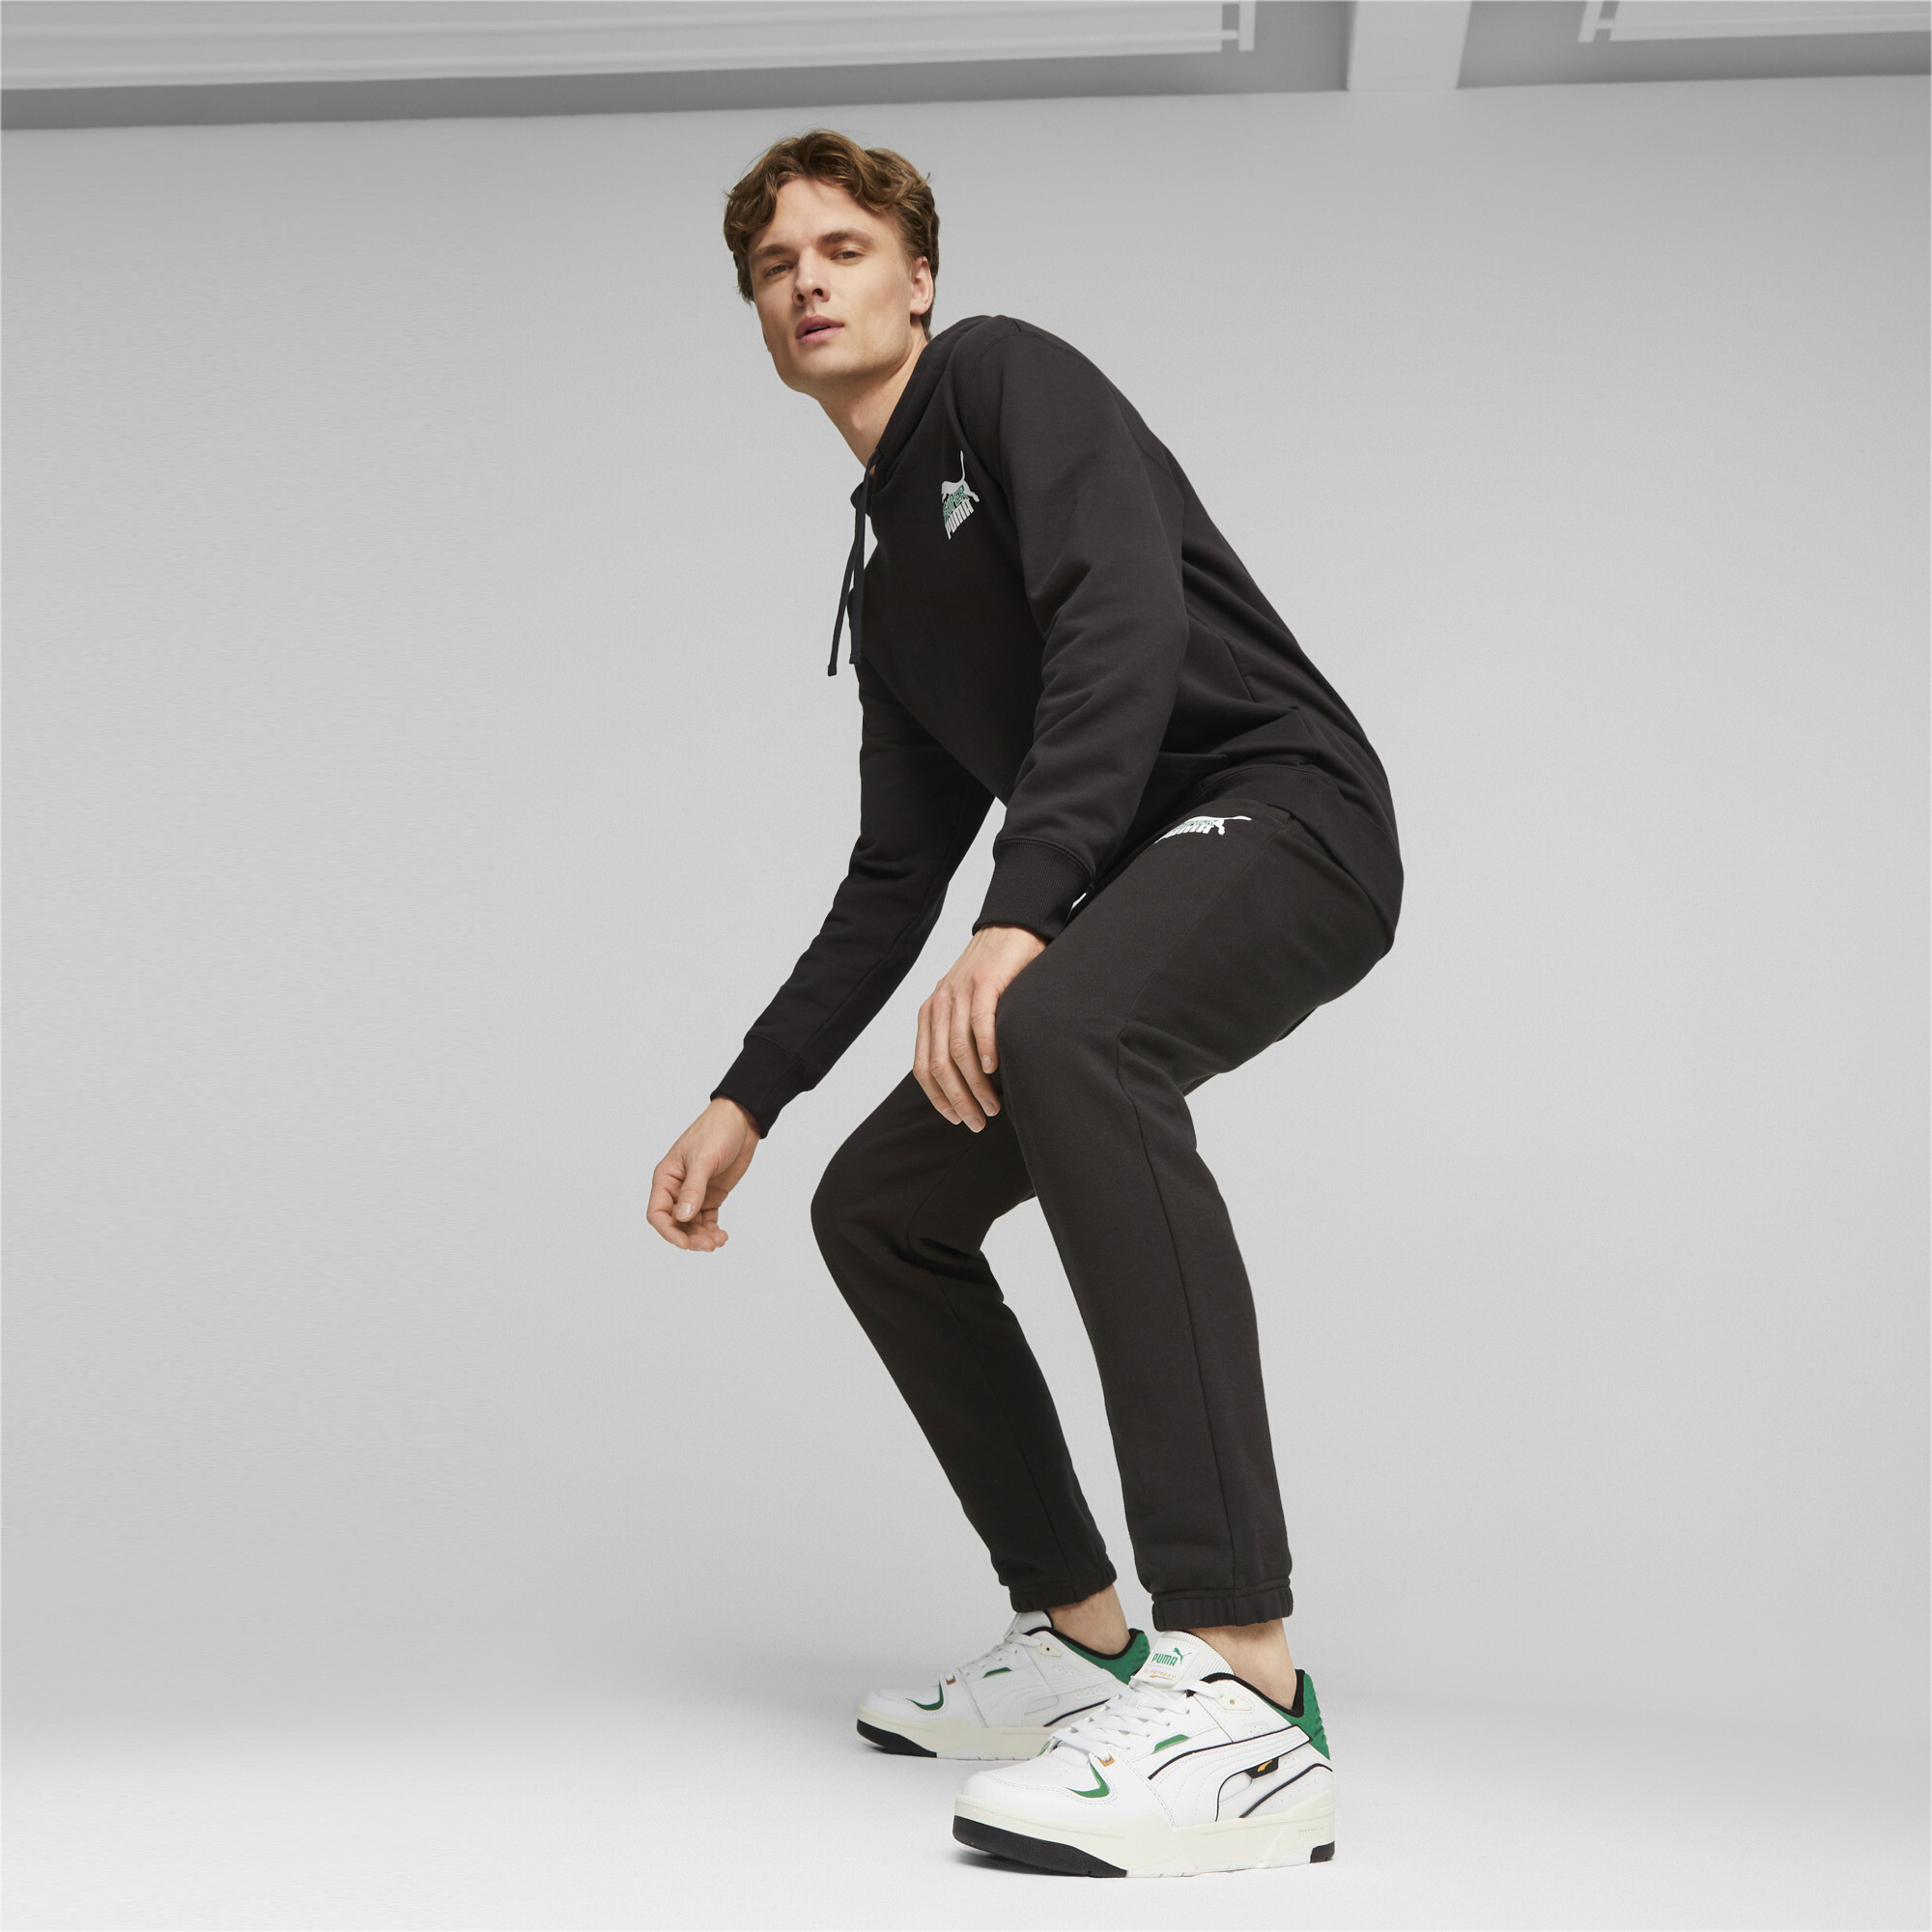 Men's PUMA Slipstream Bball Sneakers In 20 - White, Size EU 41